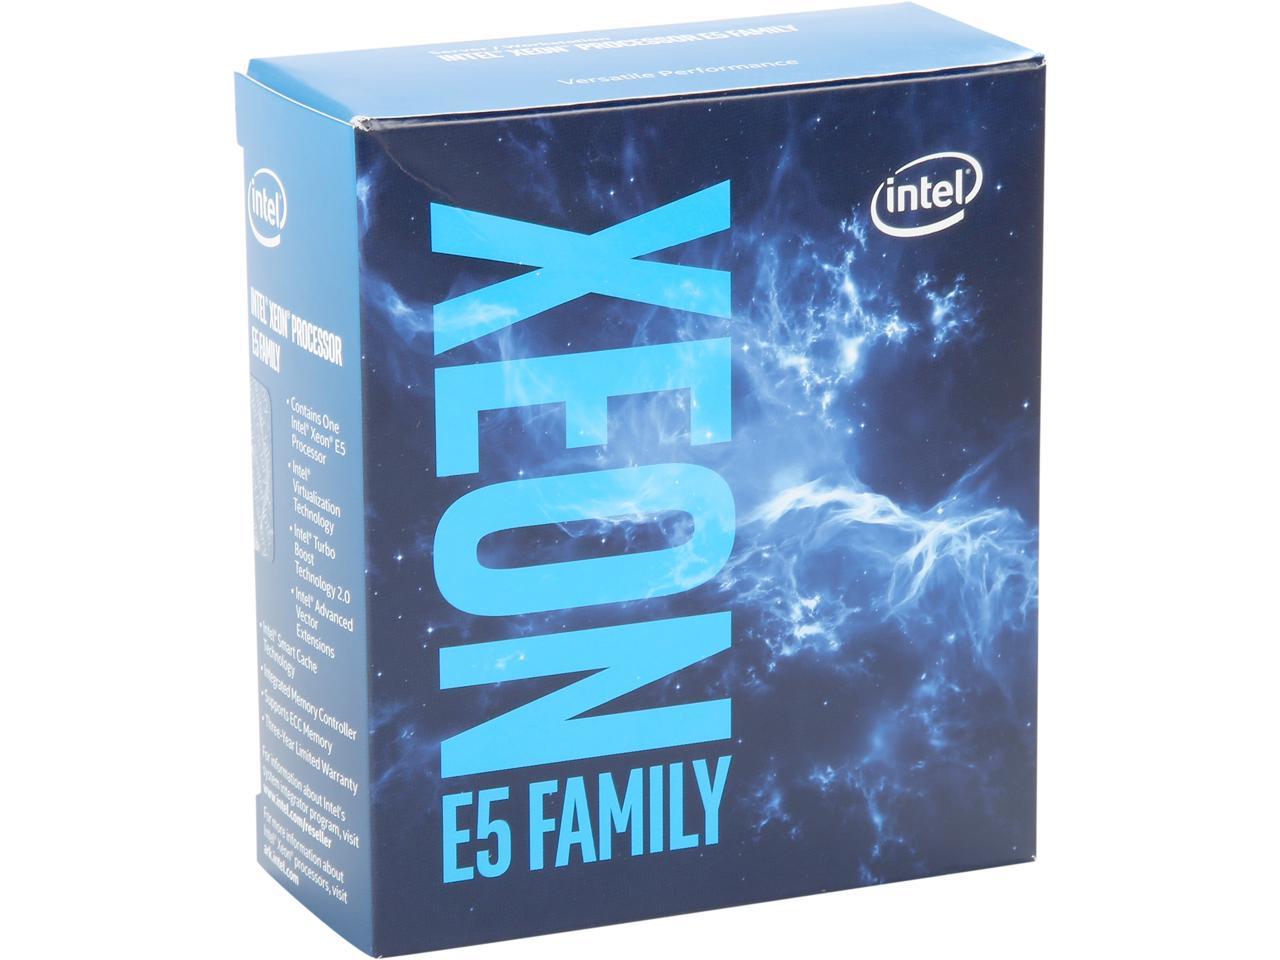 Intel Xeon E5-2640 v4 Broadwell-EP 2.4 GHz 10 x 256KB L2 Cache 25MB L3 Cache LGA 2011-3 90W BX80660E52640V4 Server Processor